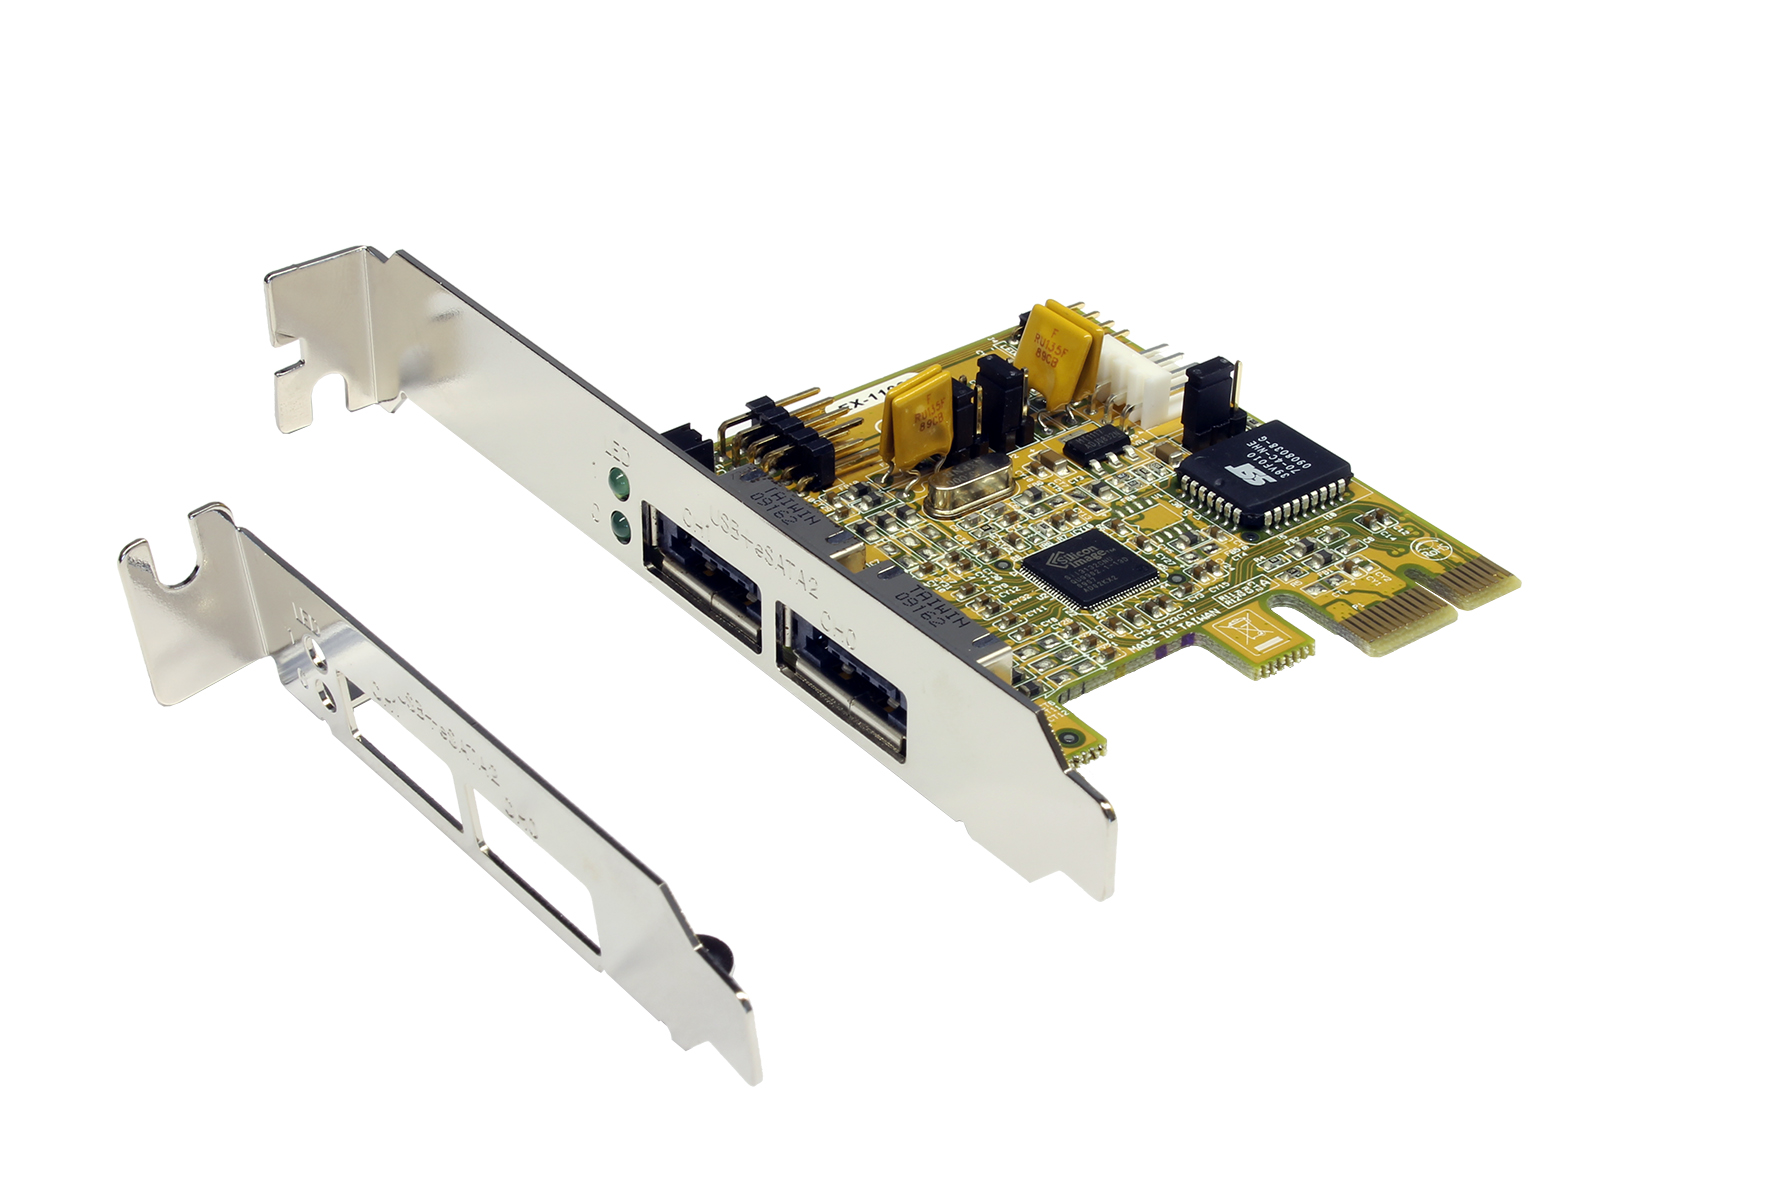 Pci e 2.0 x1. Плата расширения USB 2.0 PCI AVERMEDIA. PCIE 3.0 x16 сетевая карта. Плата PCIE USB 2x2. Плата расширения SATA PCI Express x1.